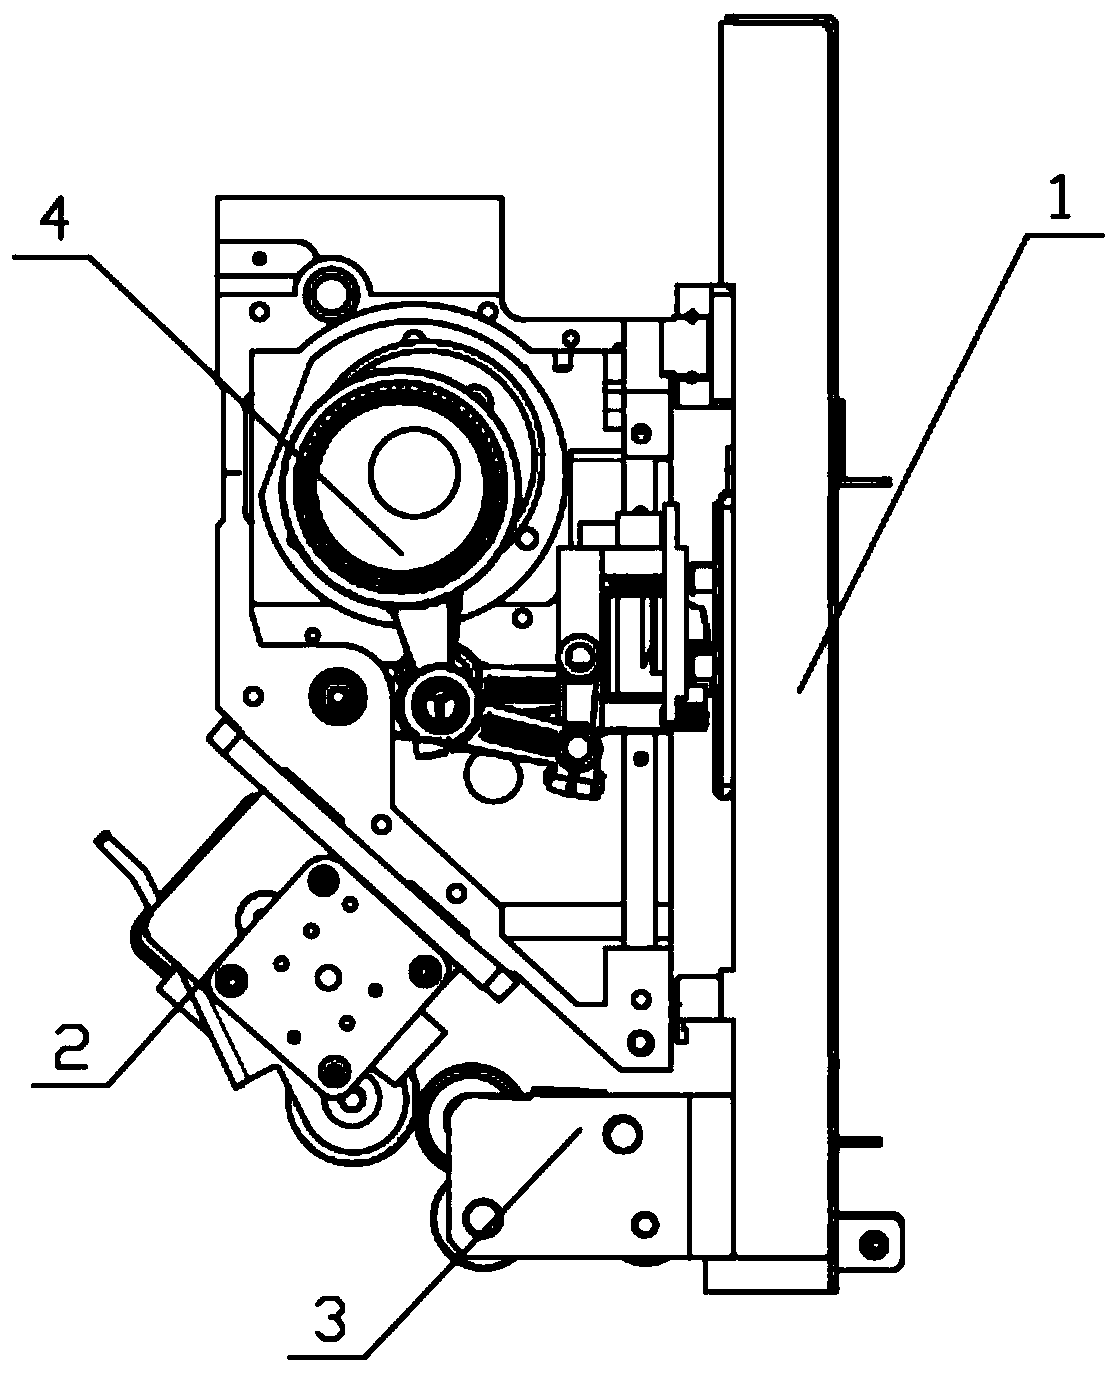 Panel pressing machine handpiece for multicolor panel pressing and panel pressing machine